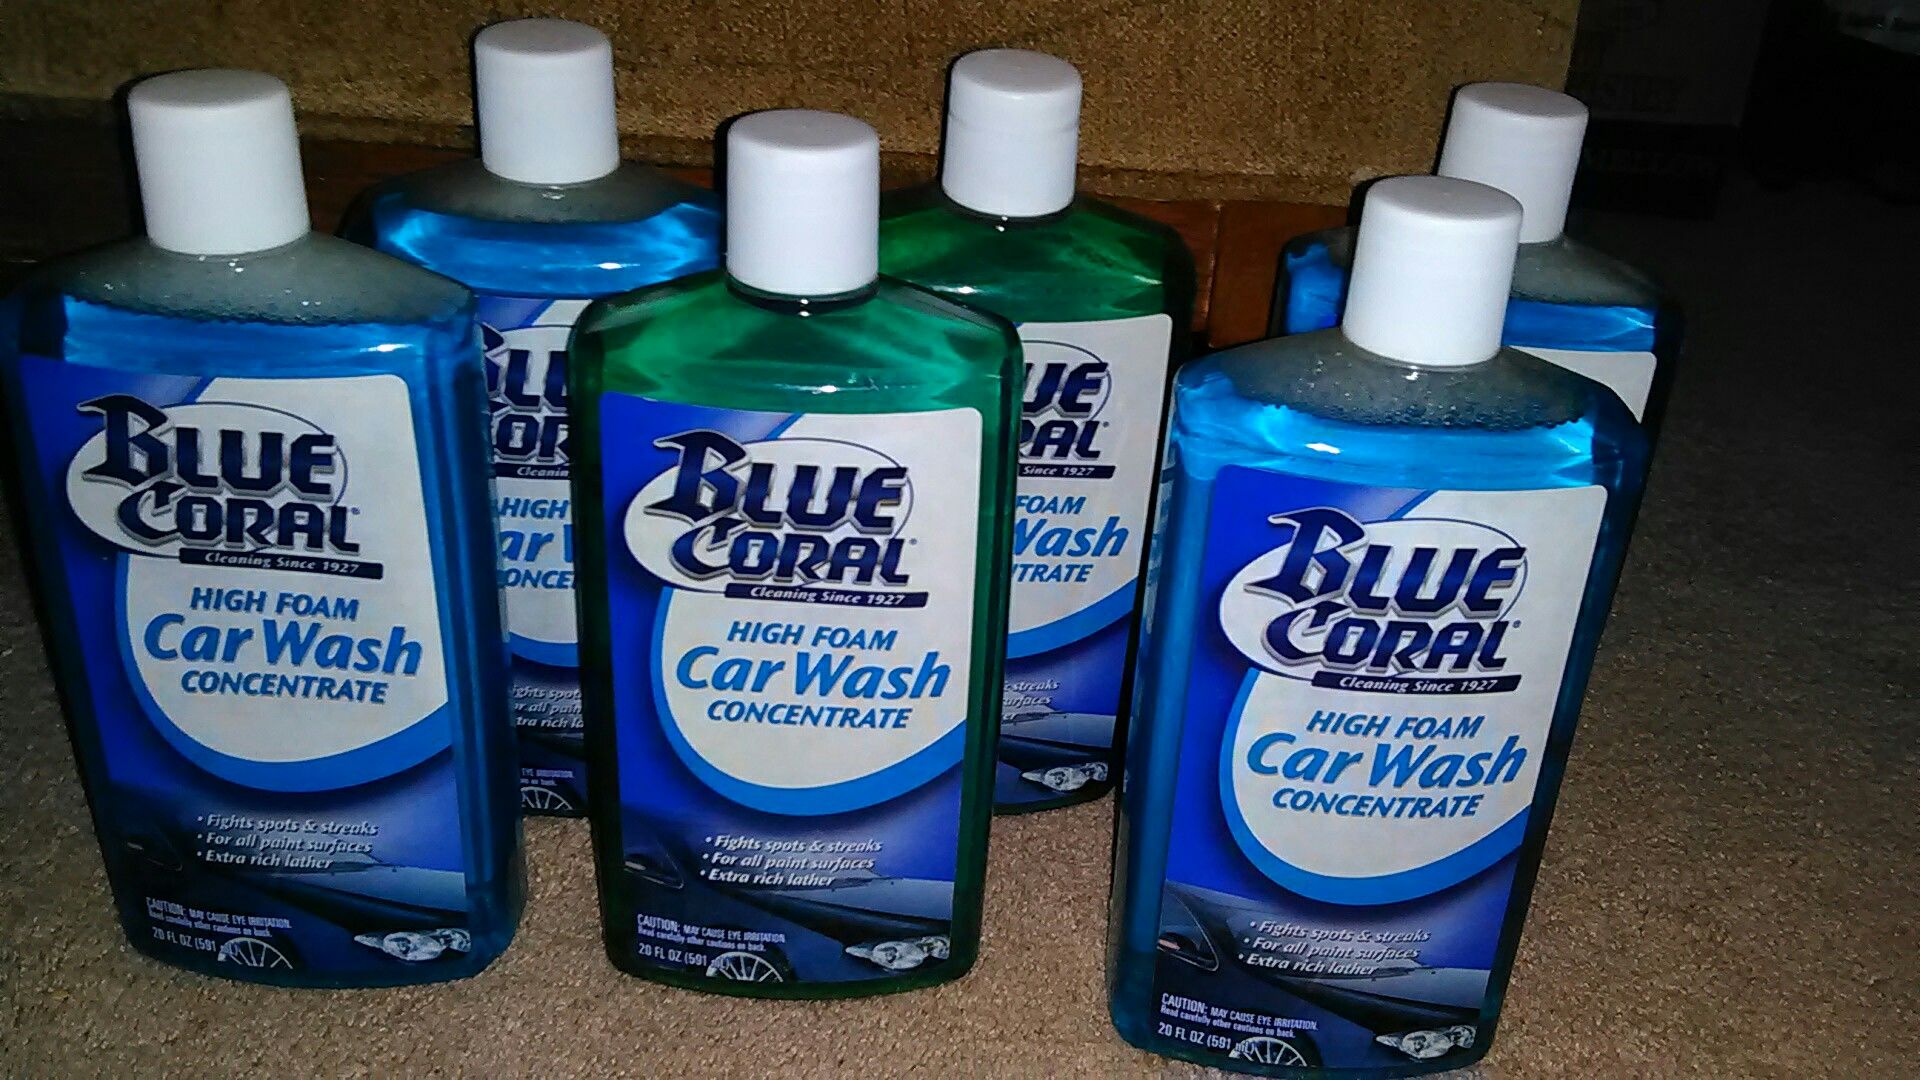 Blue Coral High Foam Car Wash Concentrate* $2.50 a bottle